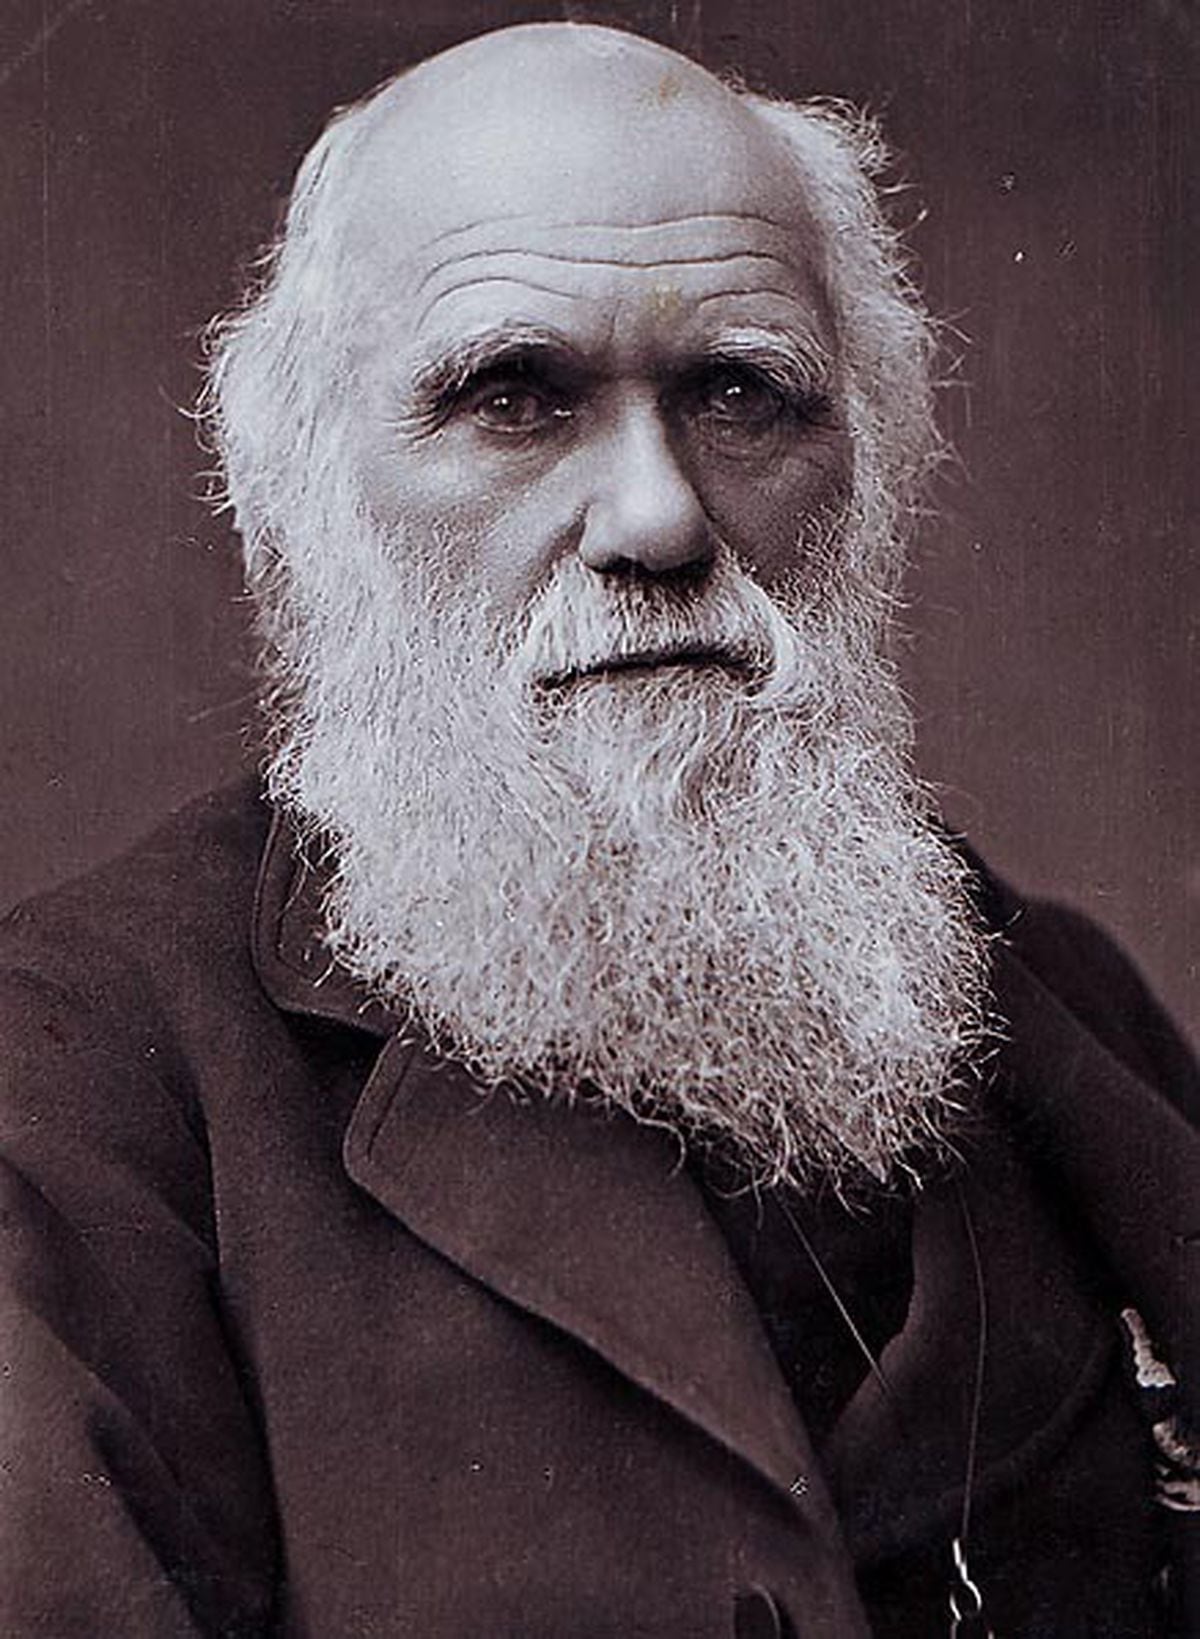 charles darwin biography wikipedia